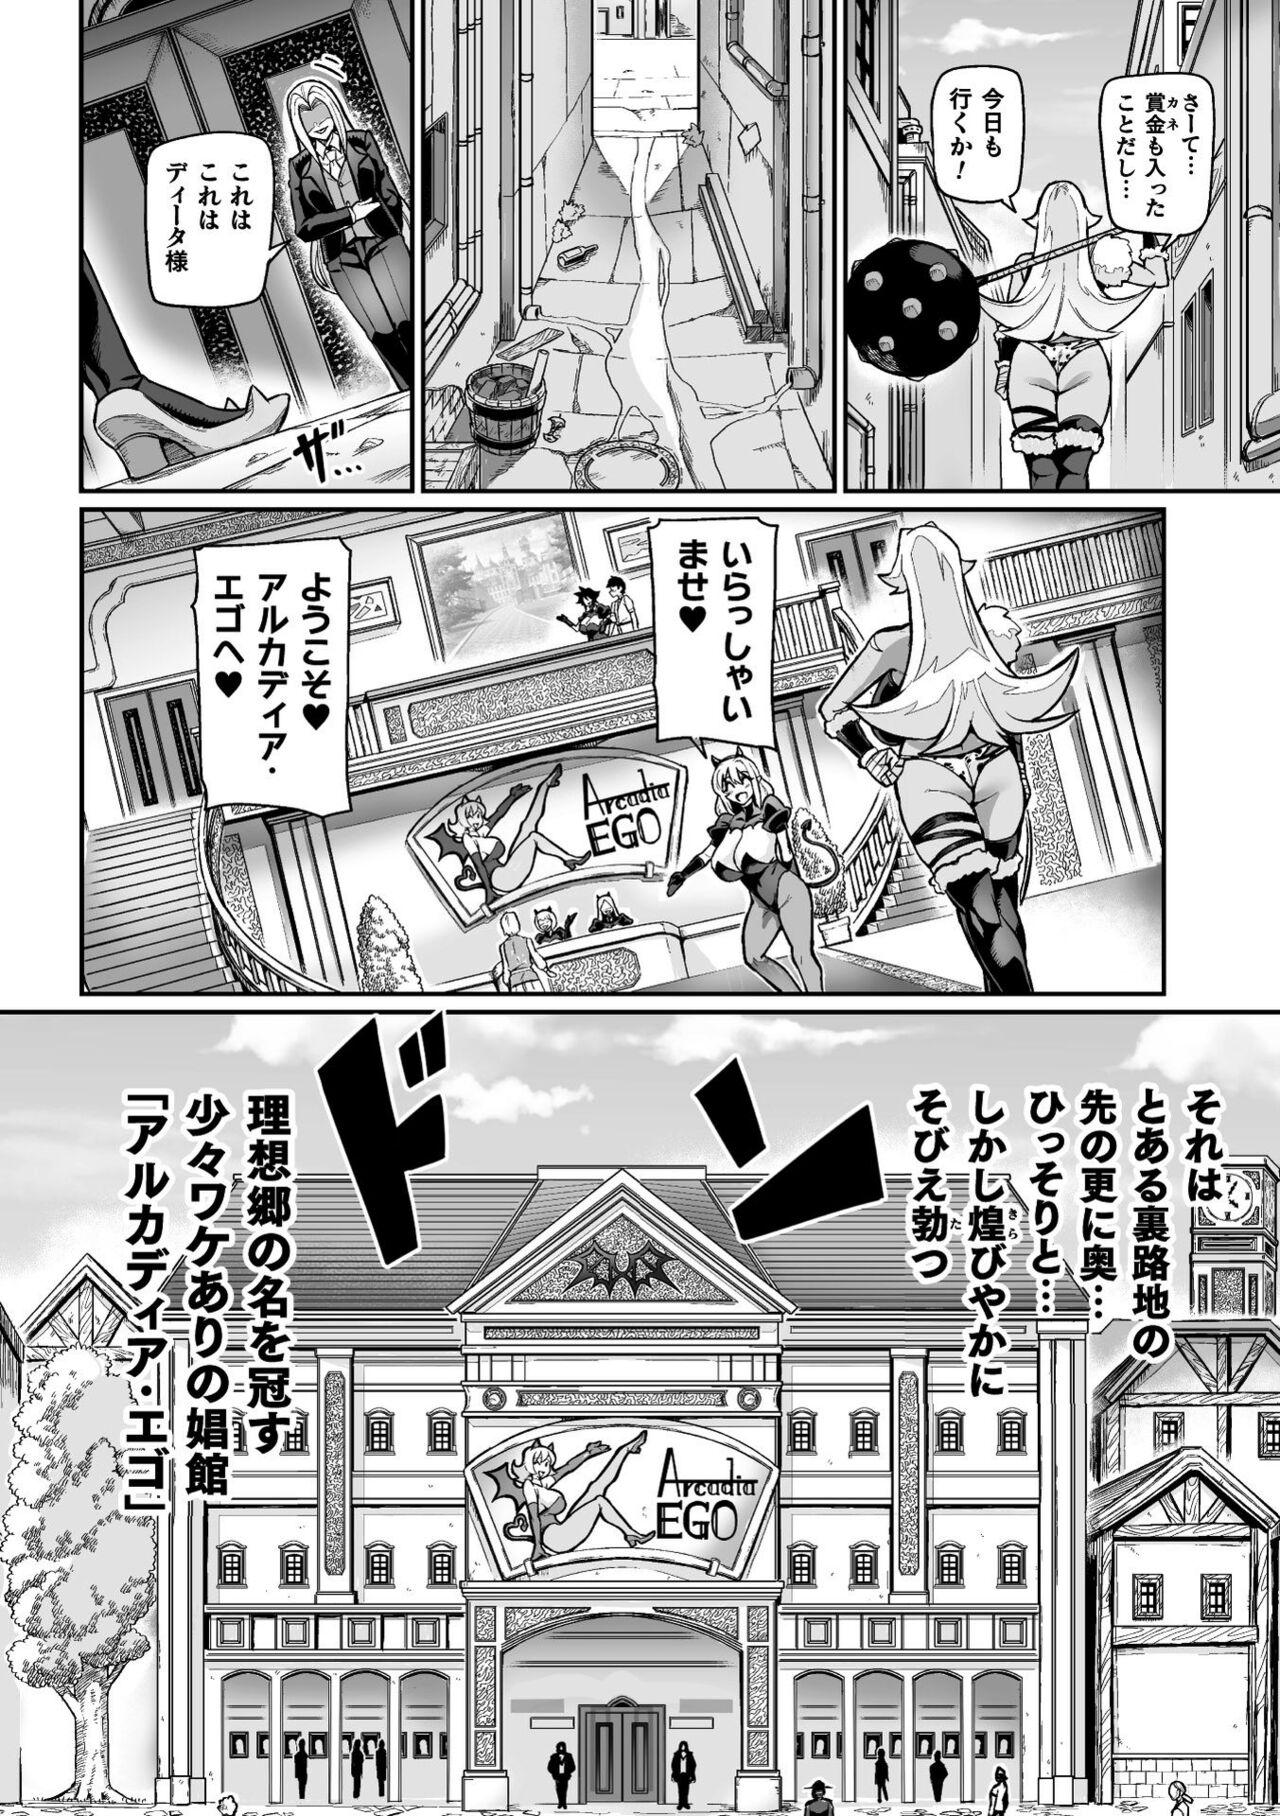 Clitoris Youkoso! Inma Shoukan Arcadia Ego Ch. 1 Parody - Page 6